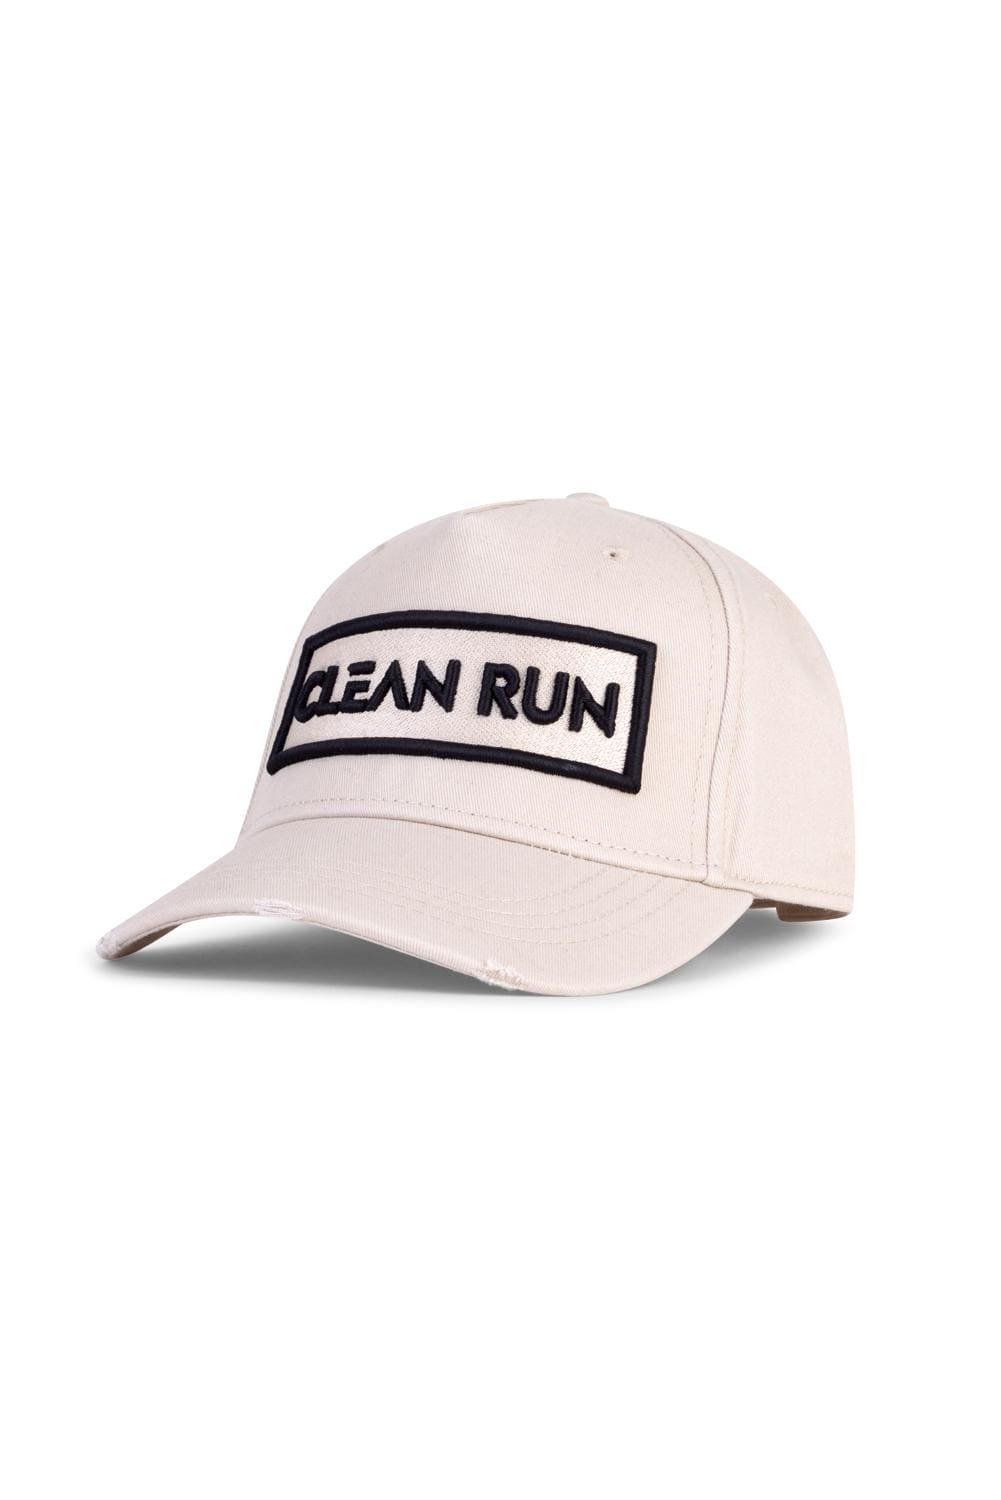 CLEAN RUN -  BEIGE CAP